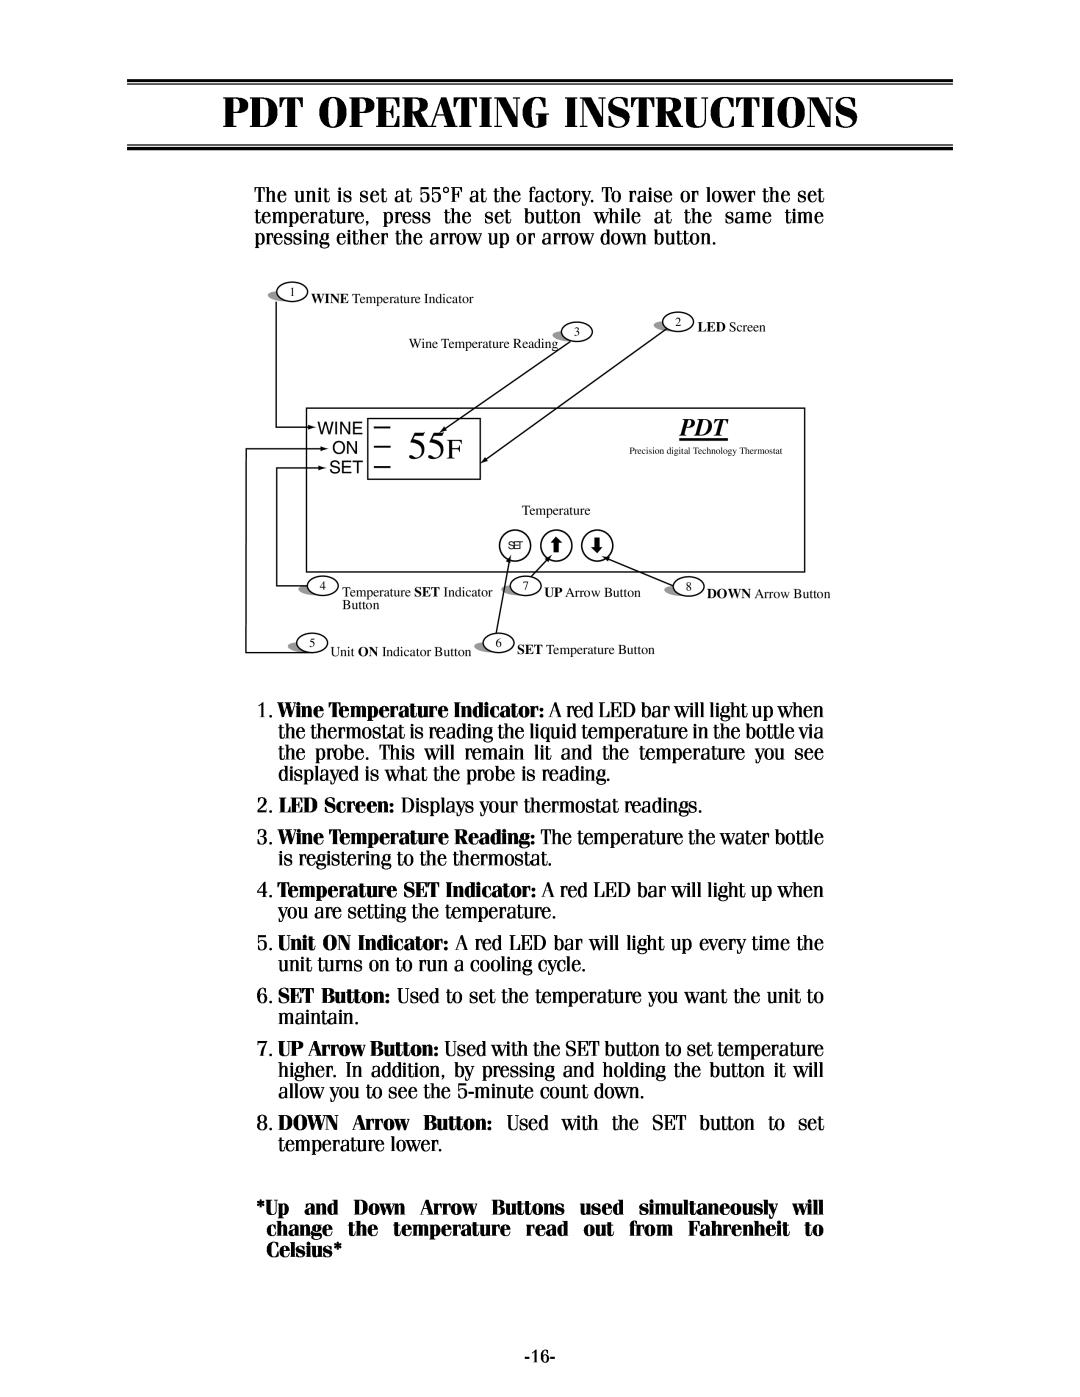 WhisperKool XLT, 17-1103 owner manual Pdt Operating Instructions 